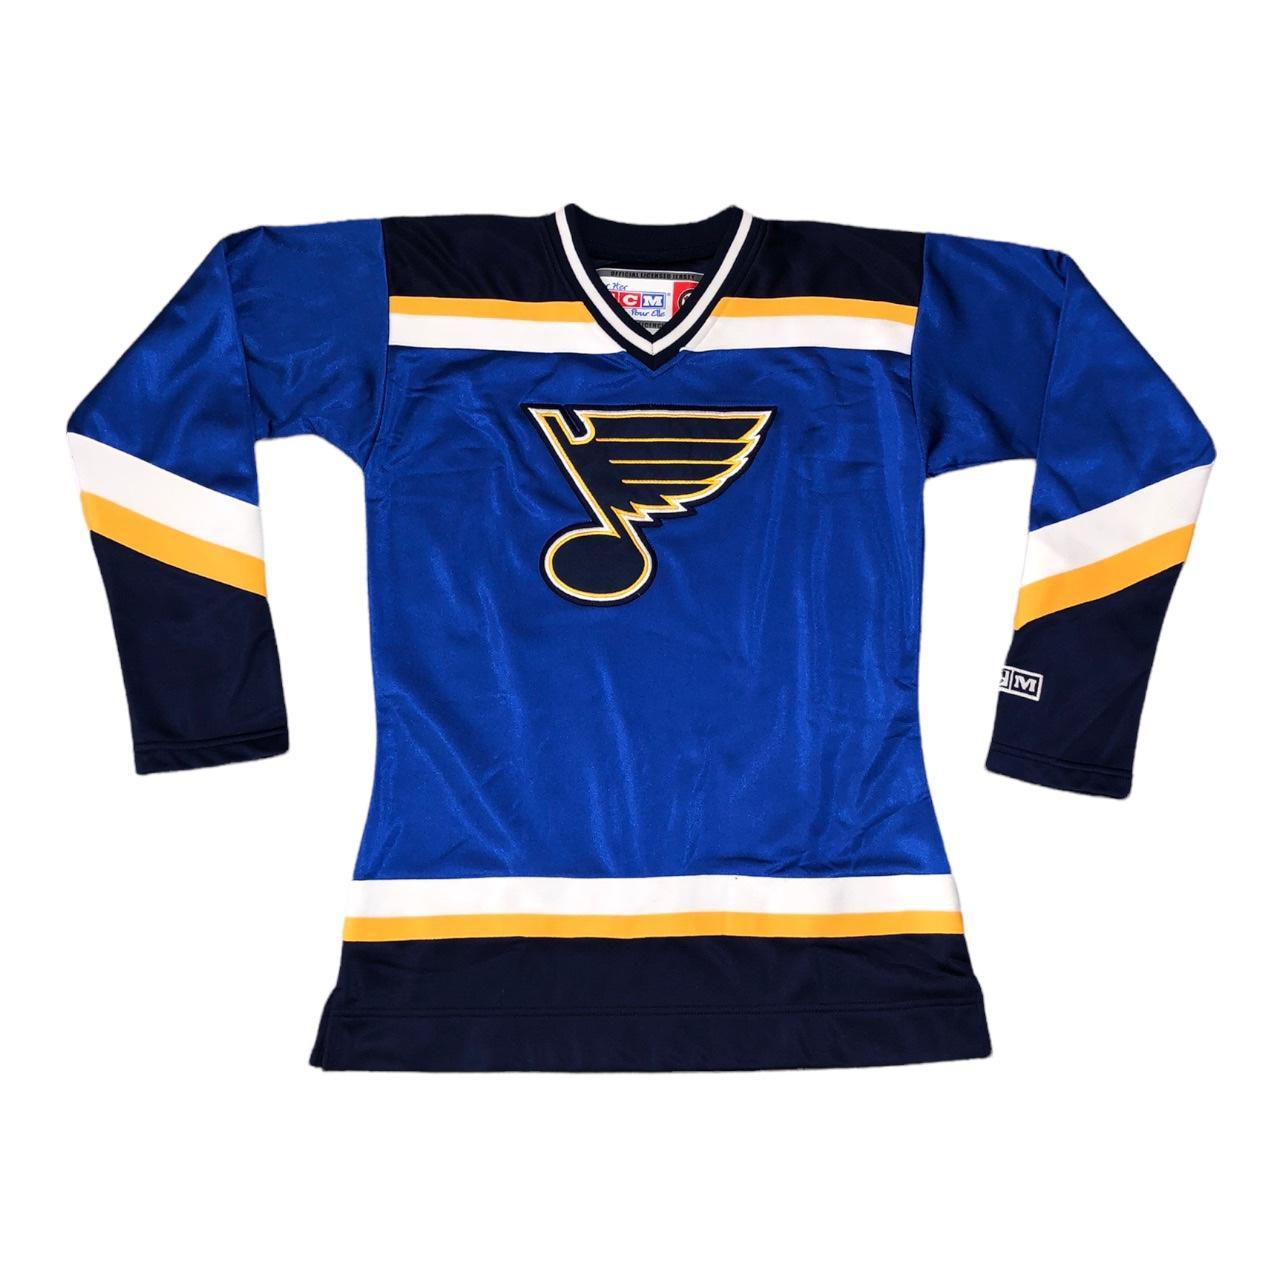 NHL St. Louis Blues T-Shirt - M